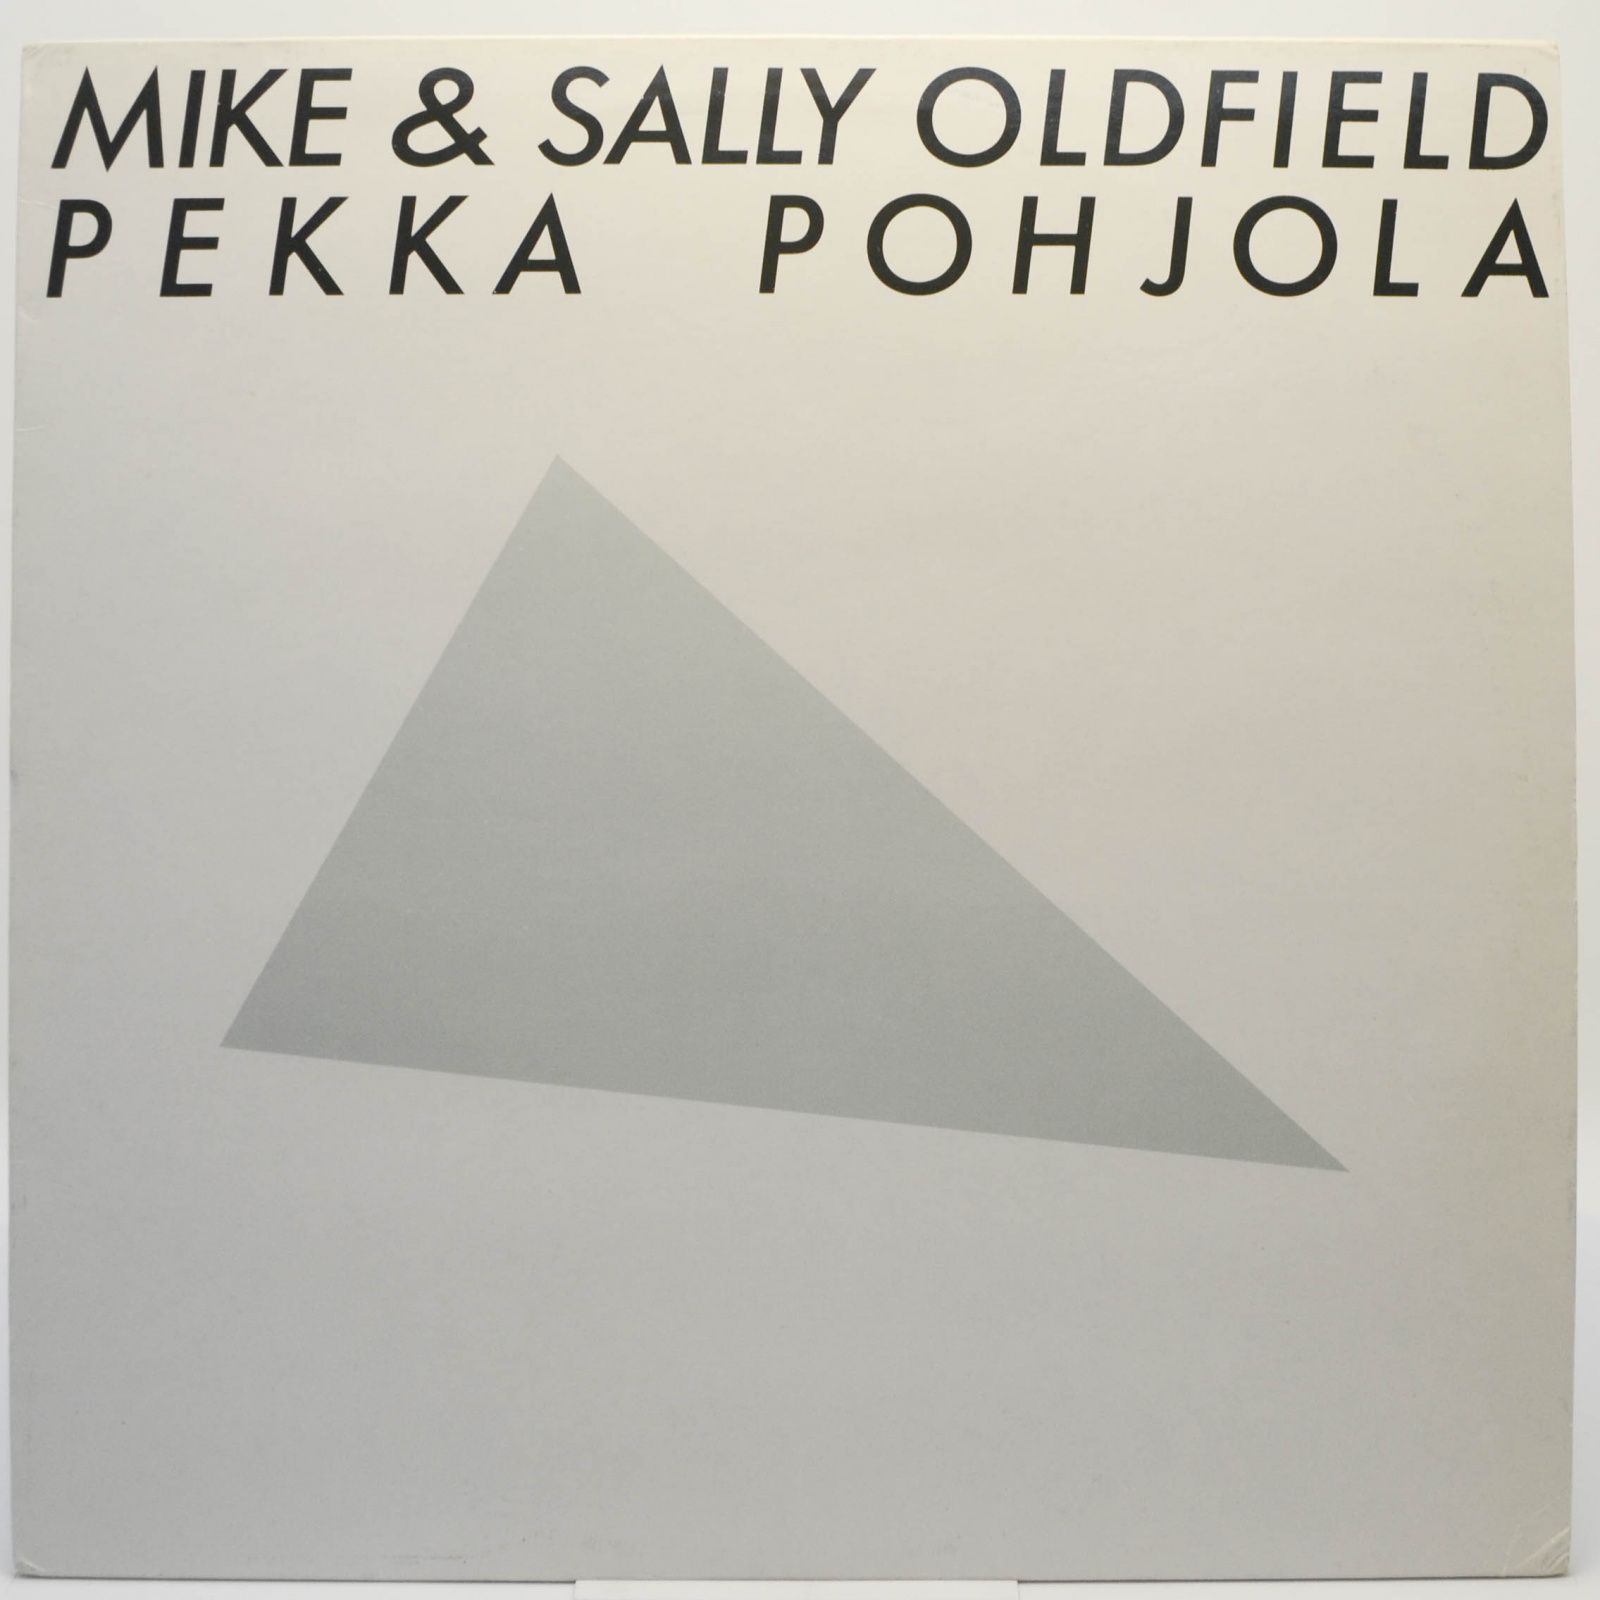 Mike & Sally Oldfield, Pekka Pohjola — Mike & Sally Oldfield, Pekka Pohjola, 1981